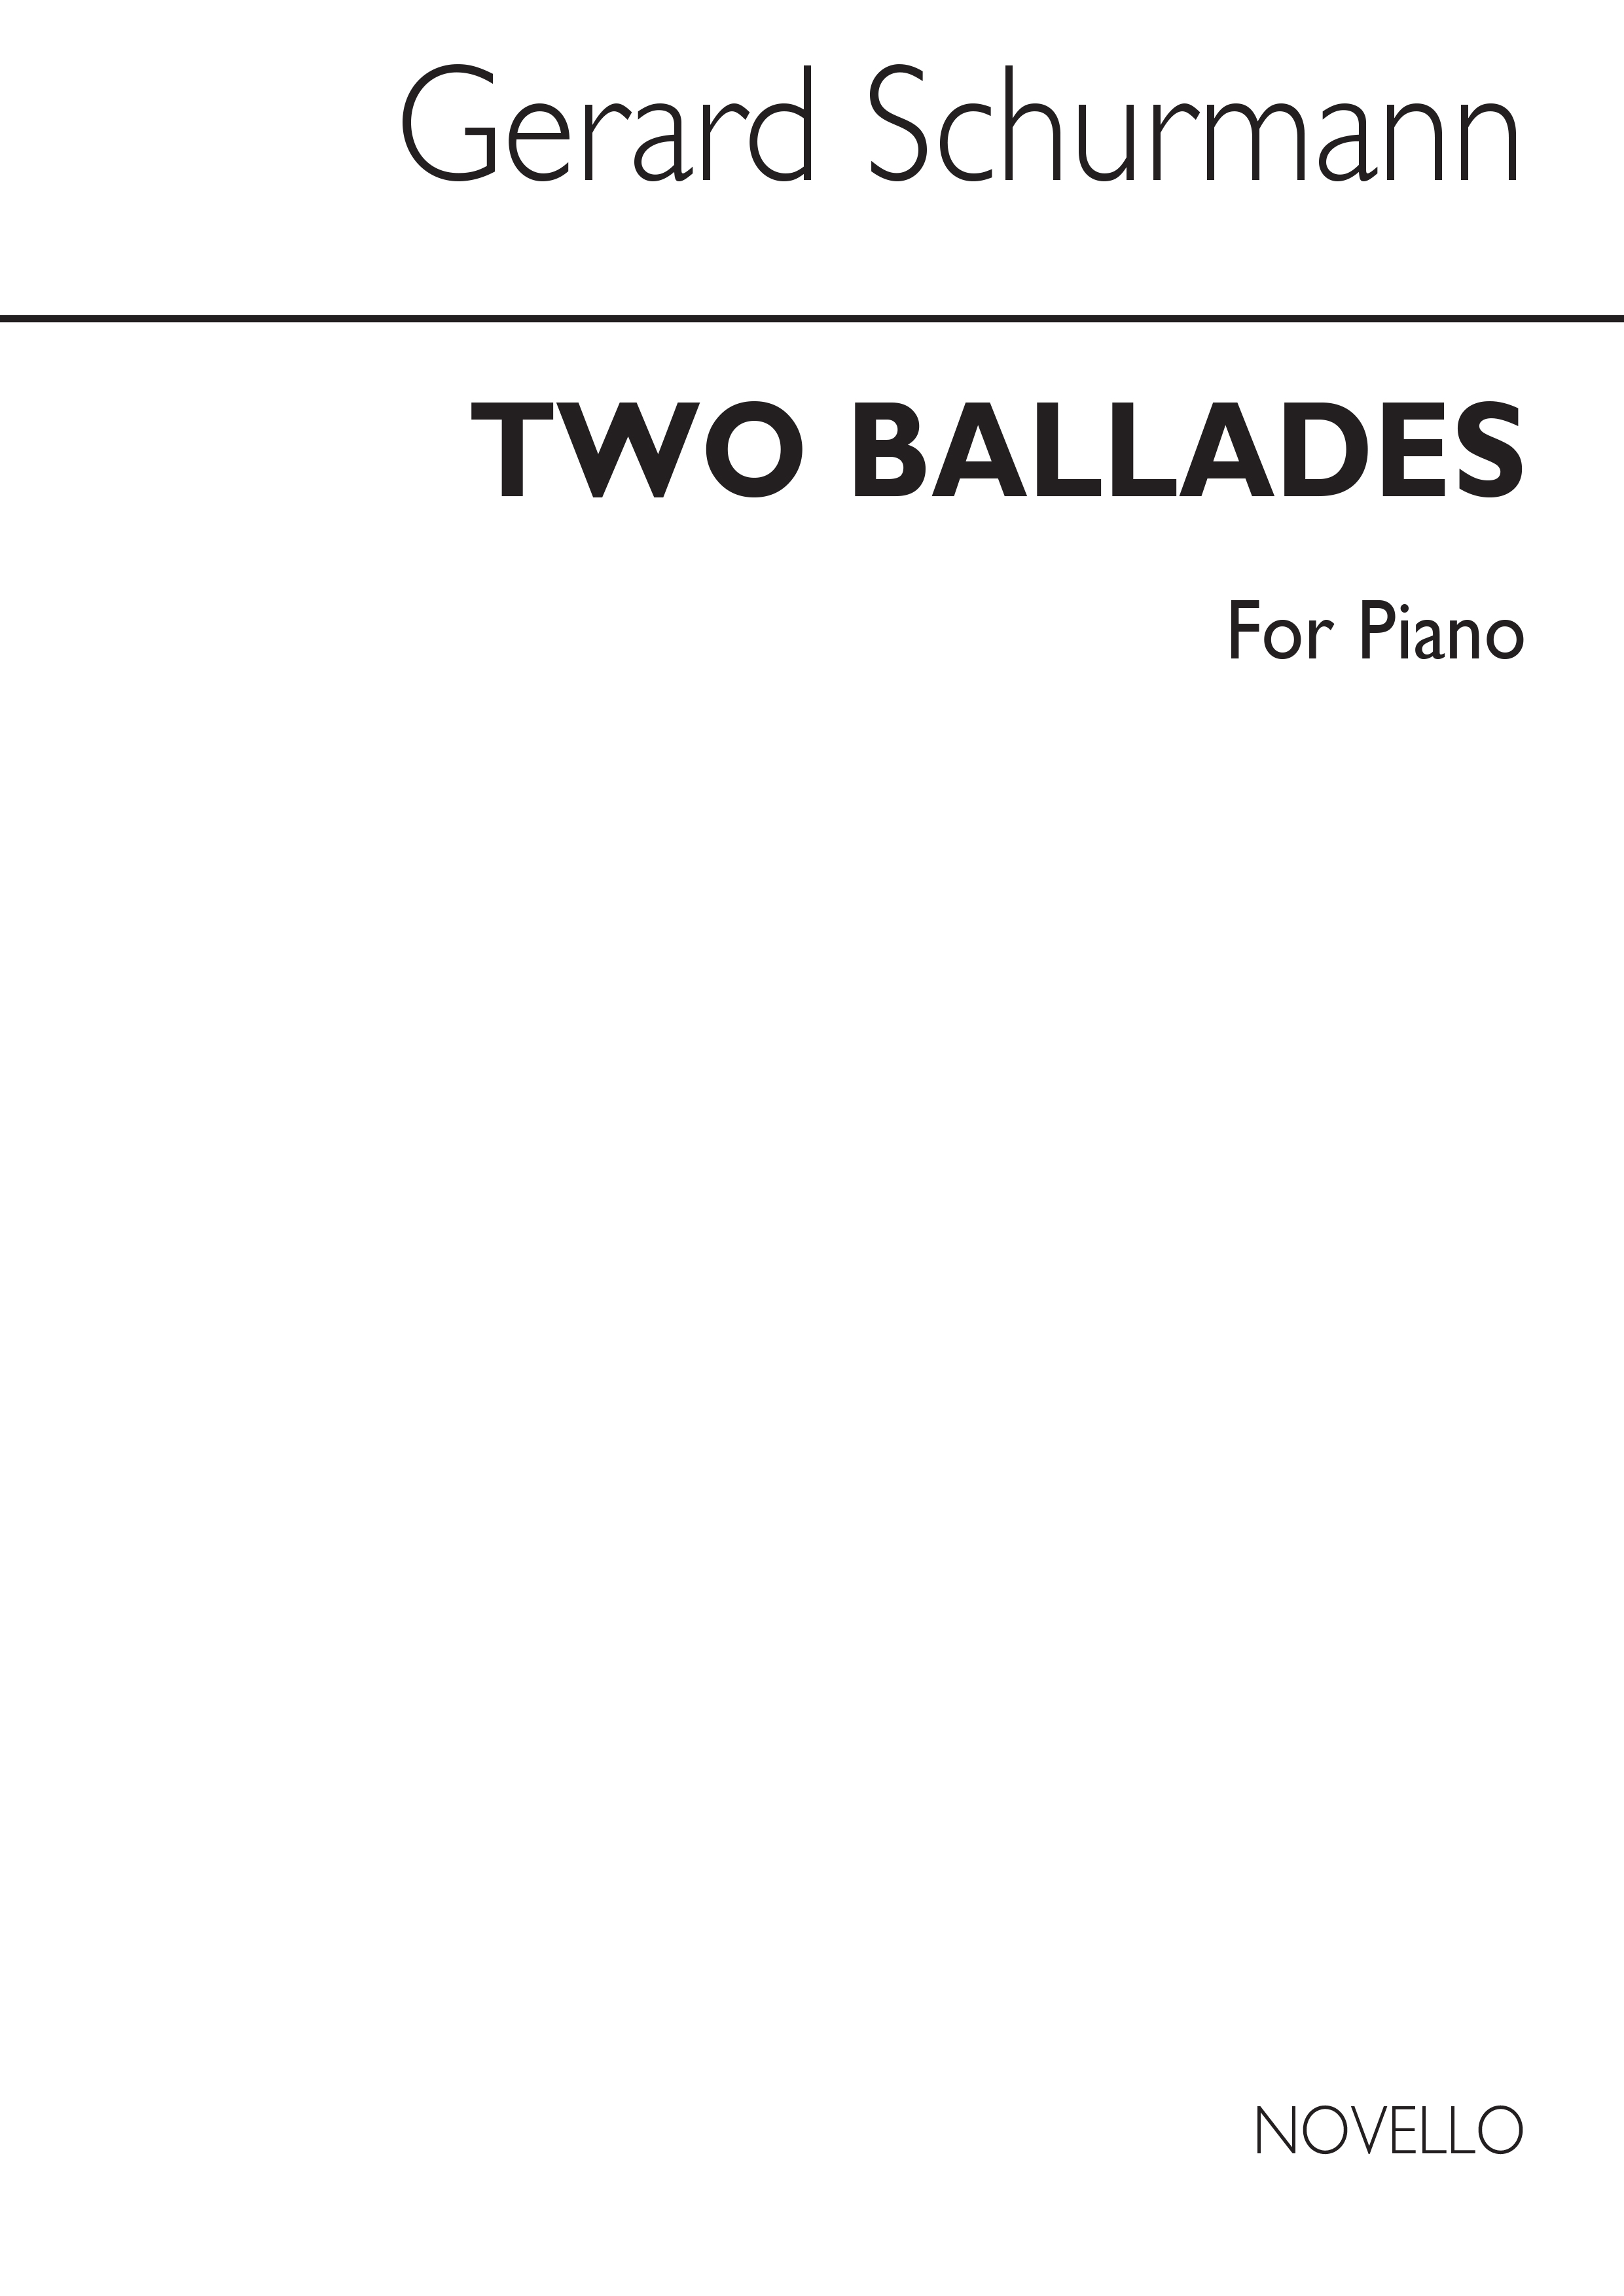 Schurmann: Two Ballades for Piano